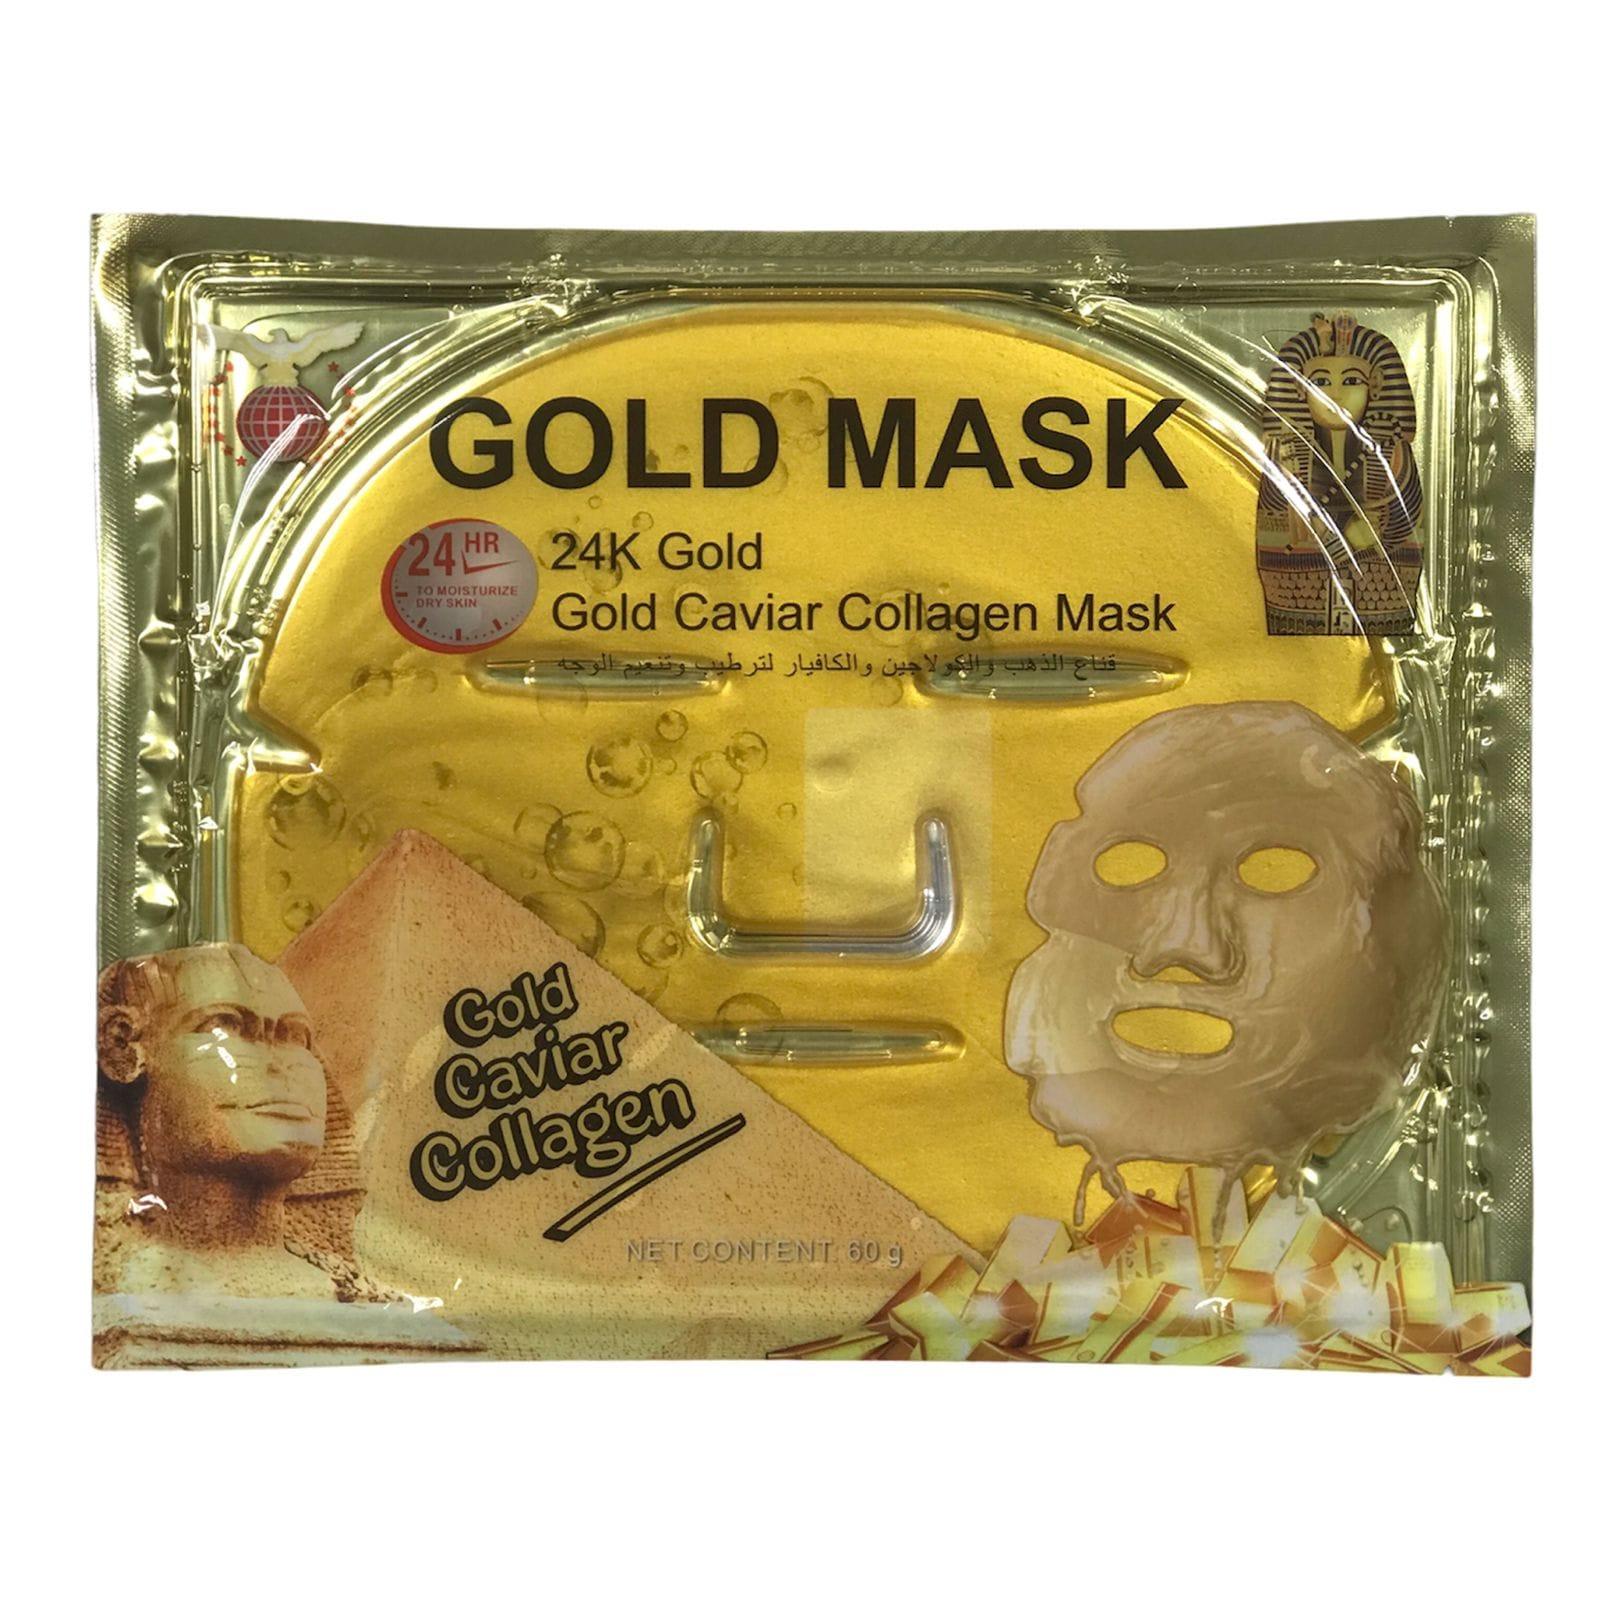 Black 24k Gold Caviar Collagen Mask 1pc 60g